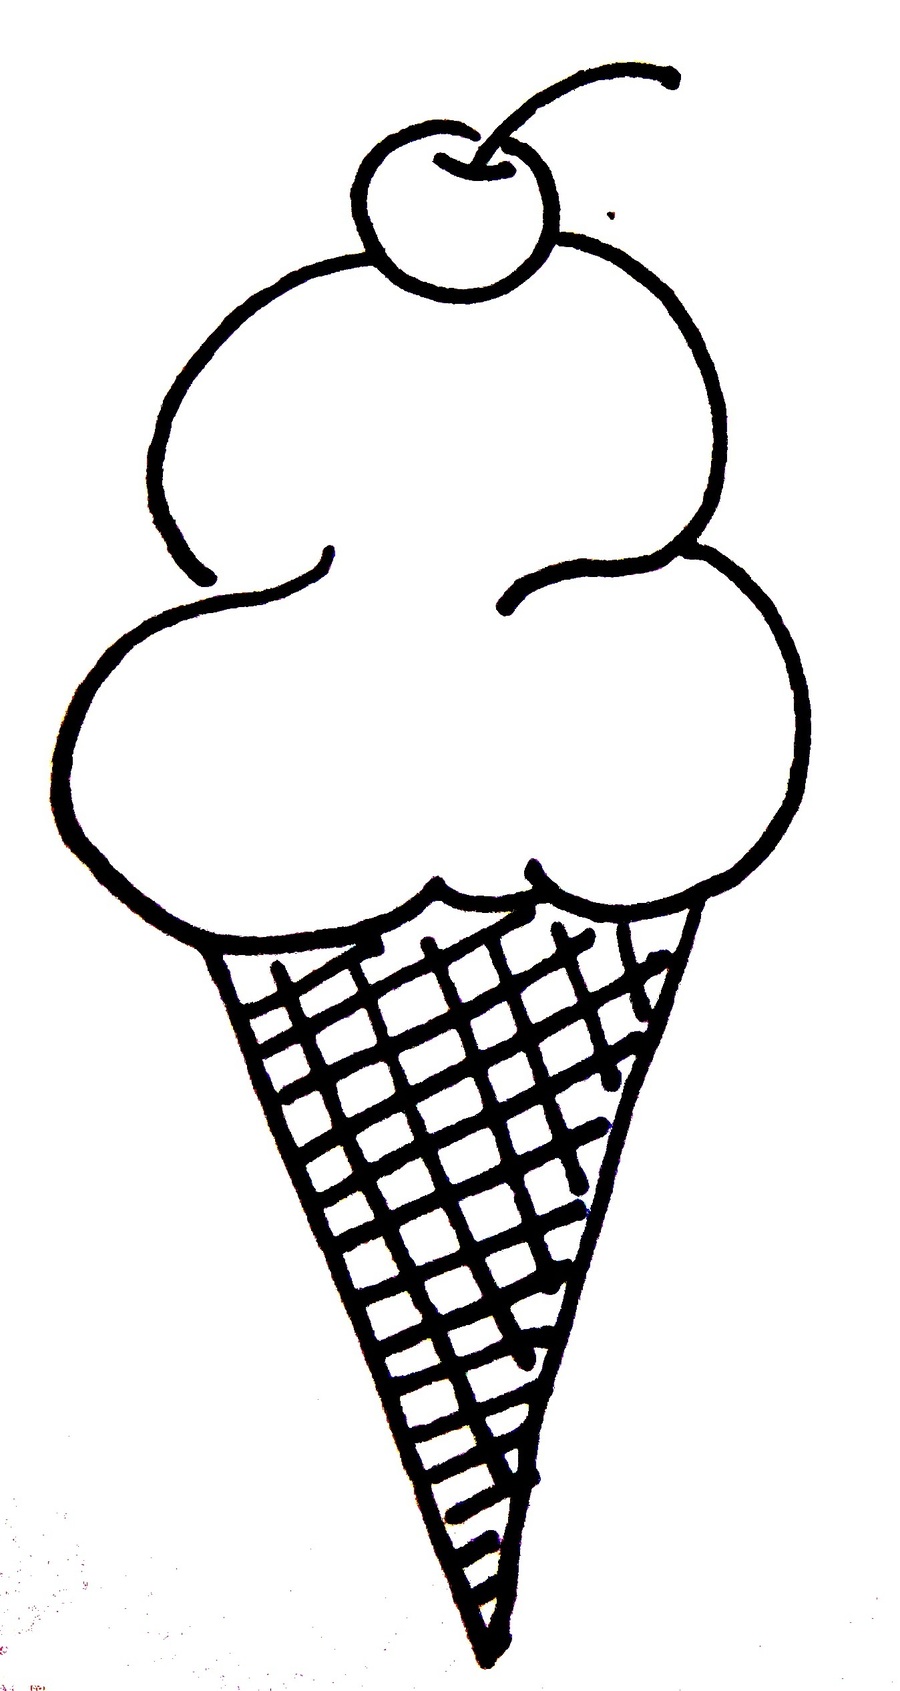 icecream clipart drawing